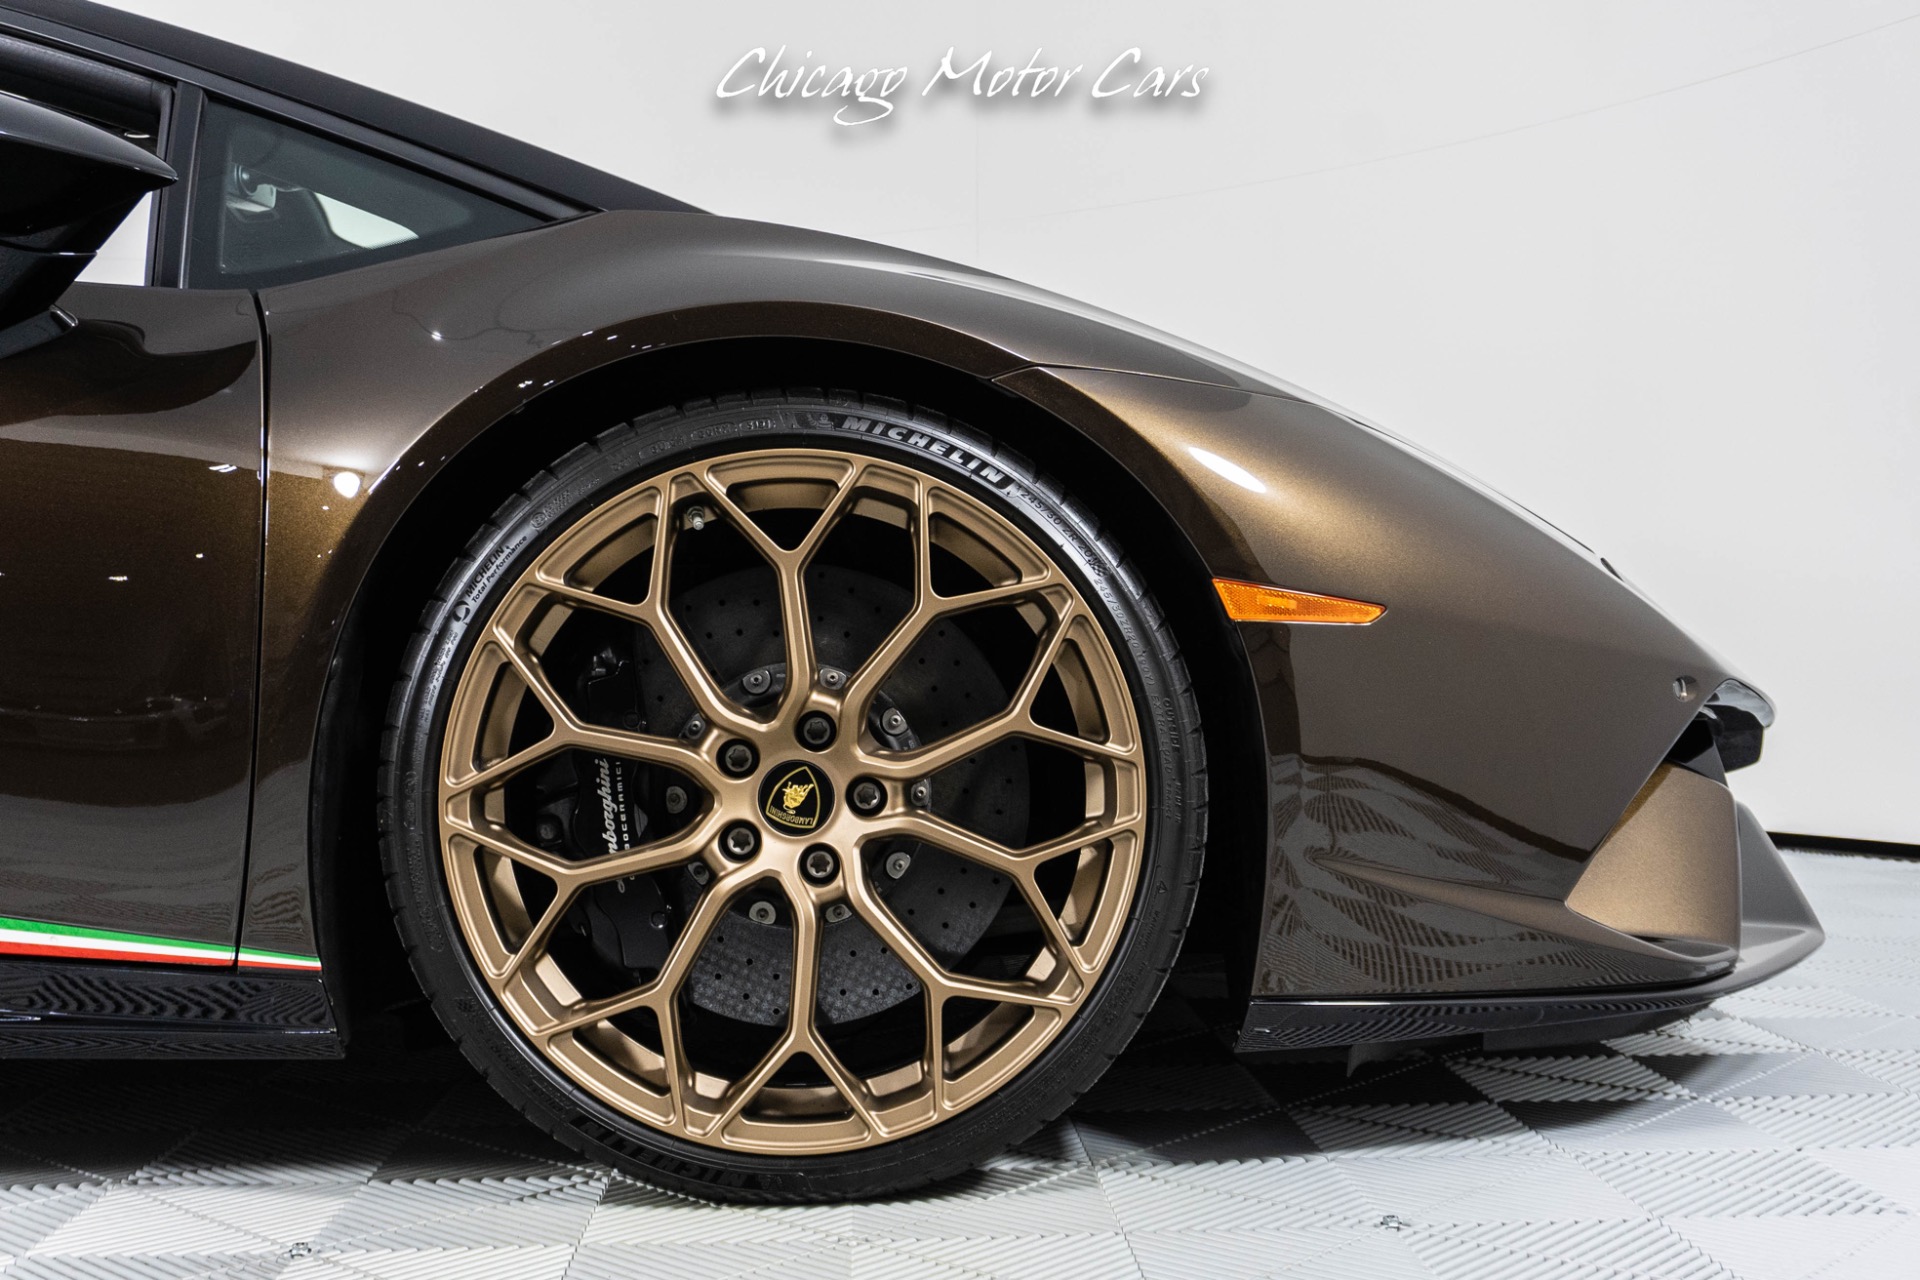 Used-2018-Lamborghini-Huracan-Performante-Spyder-Custom-Ad-Personam-Stunning-Spec-Only-3k-Miles-Loaded